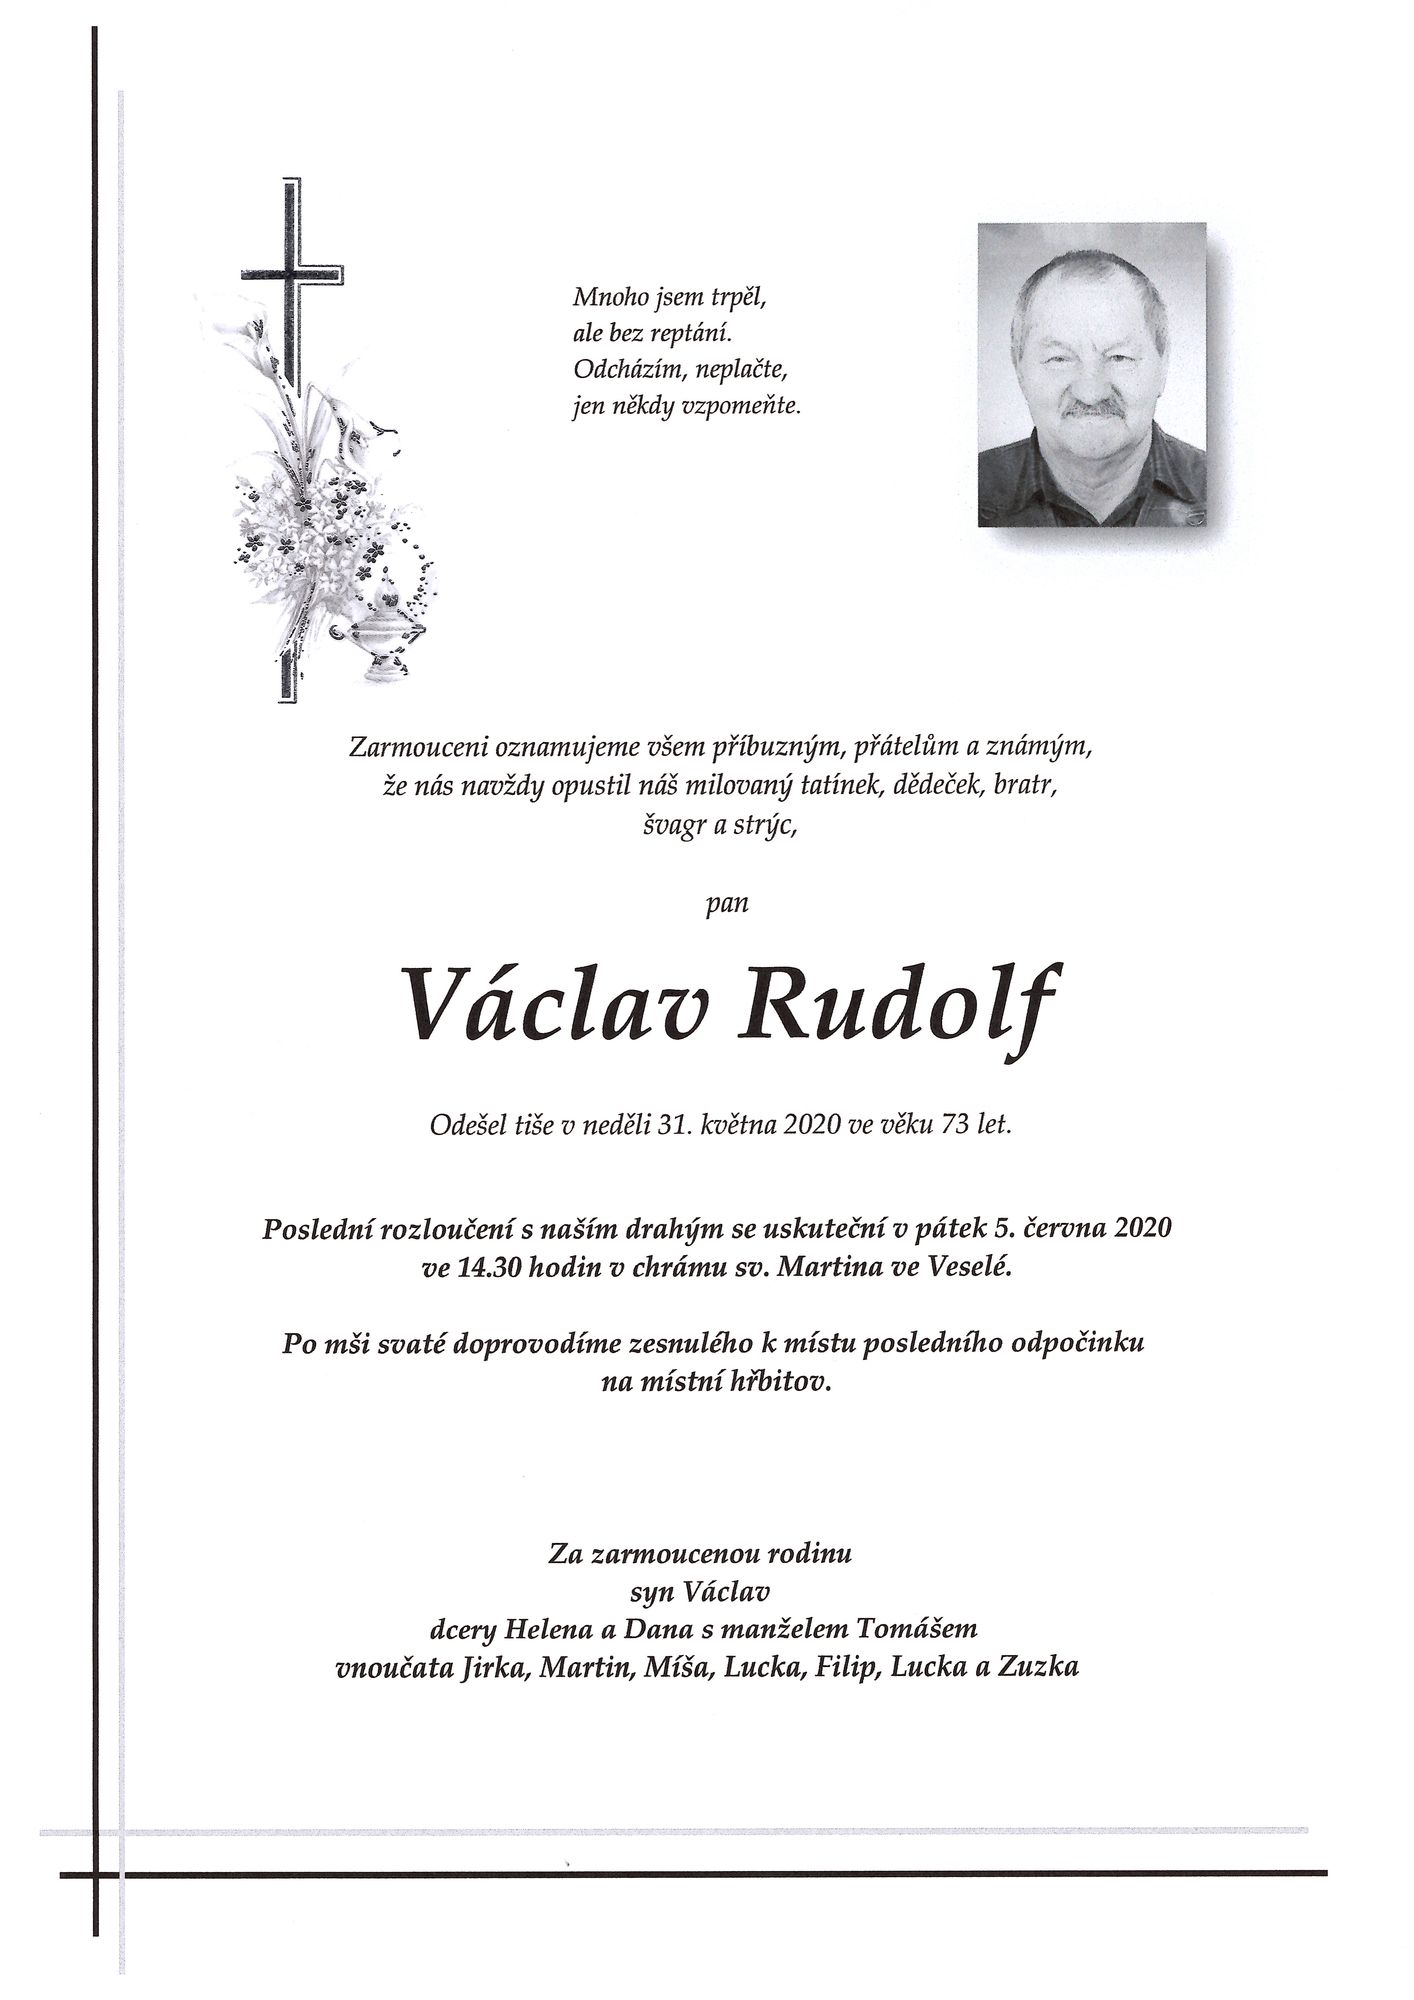 Václav Rudolf